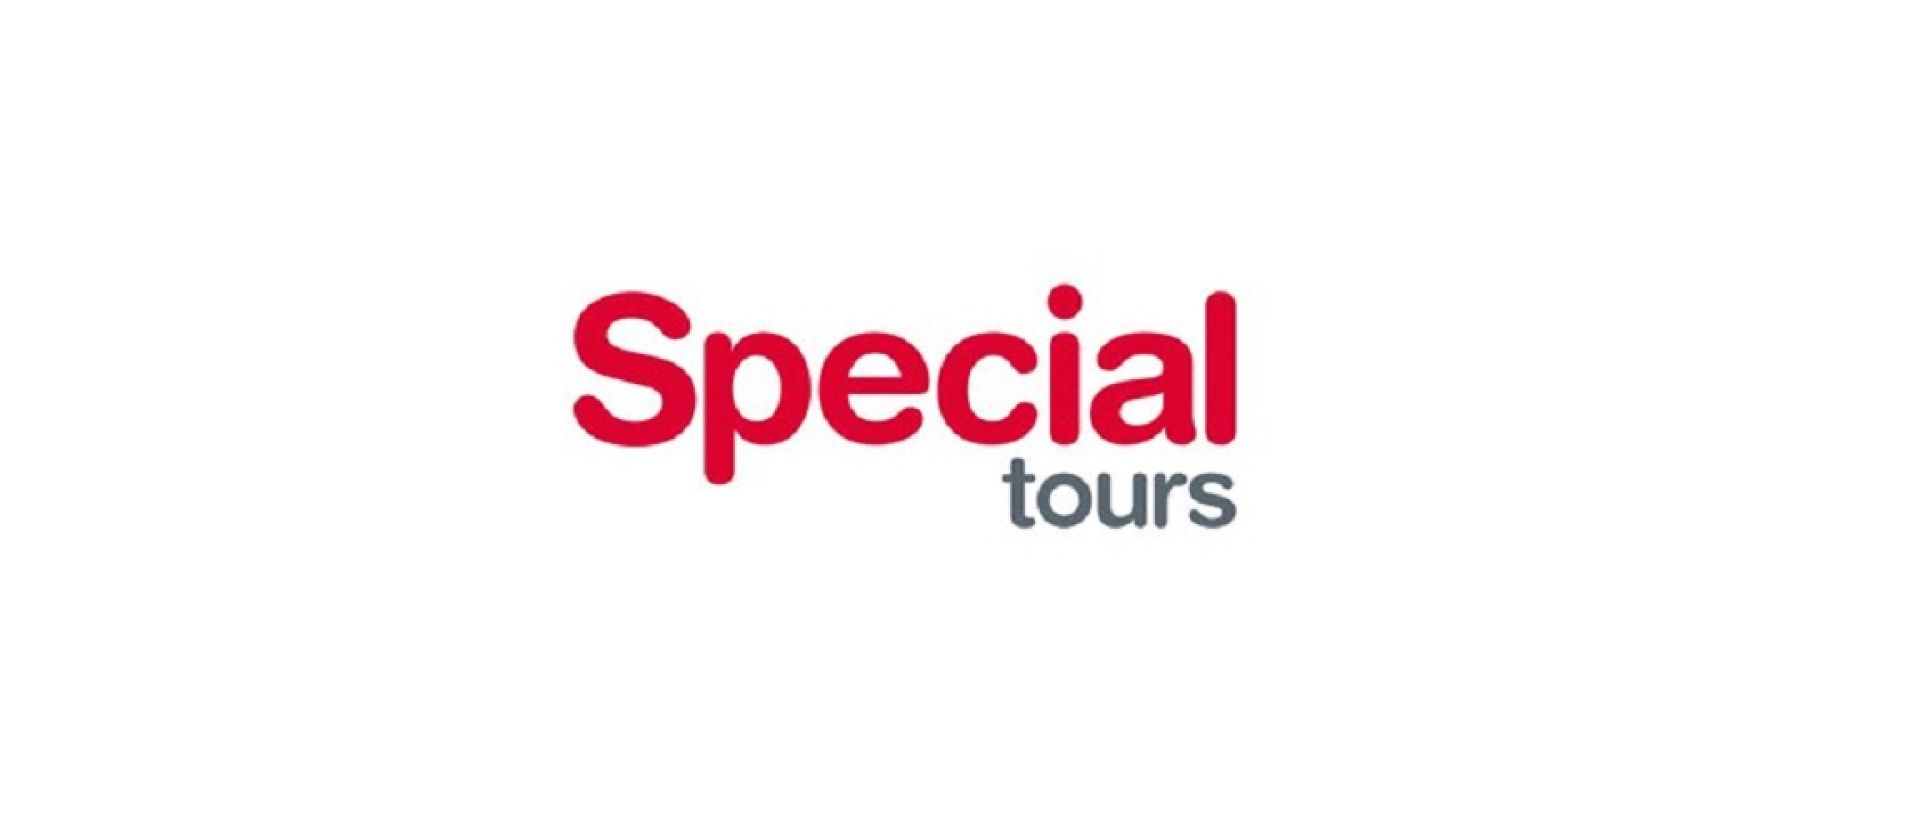 special tours facebook